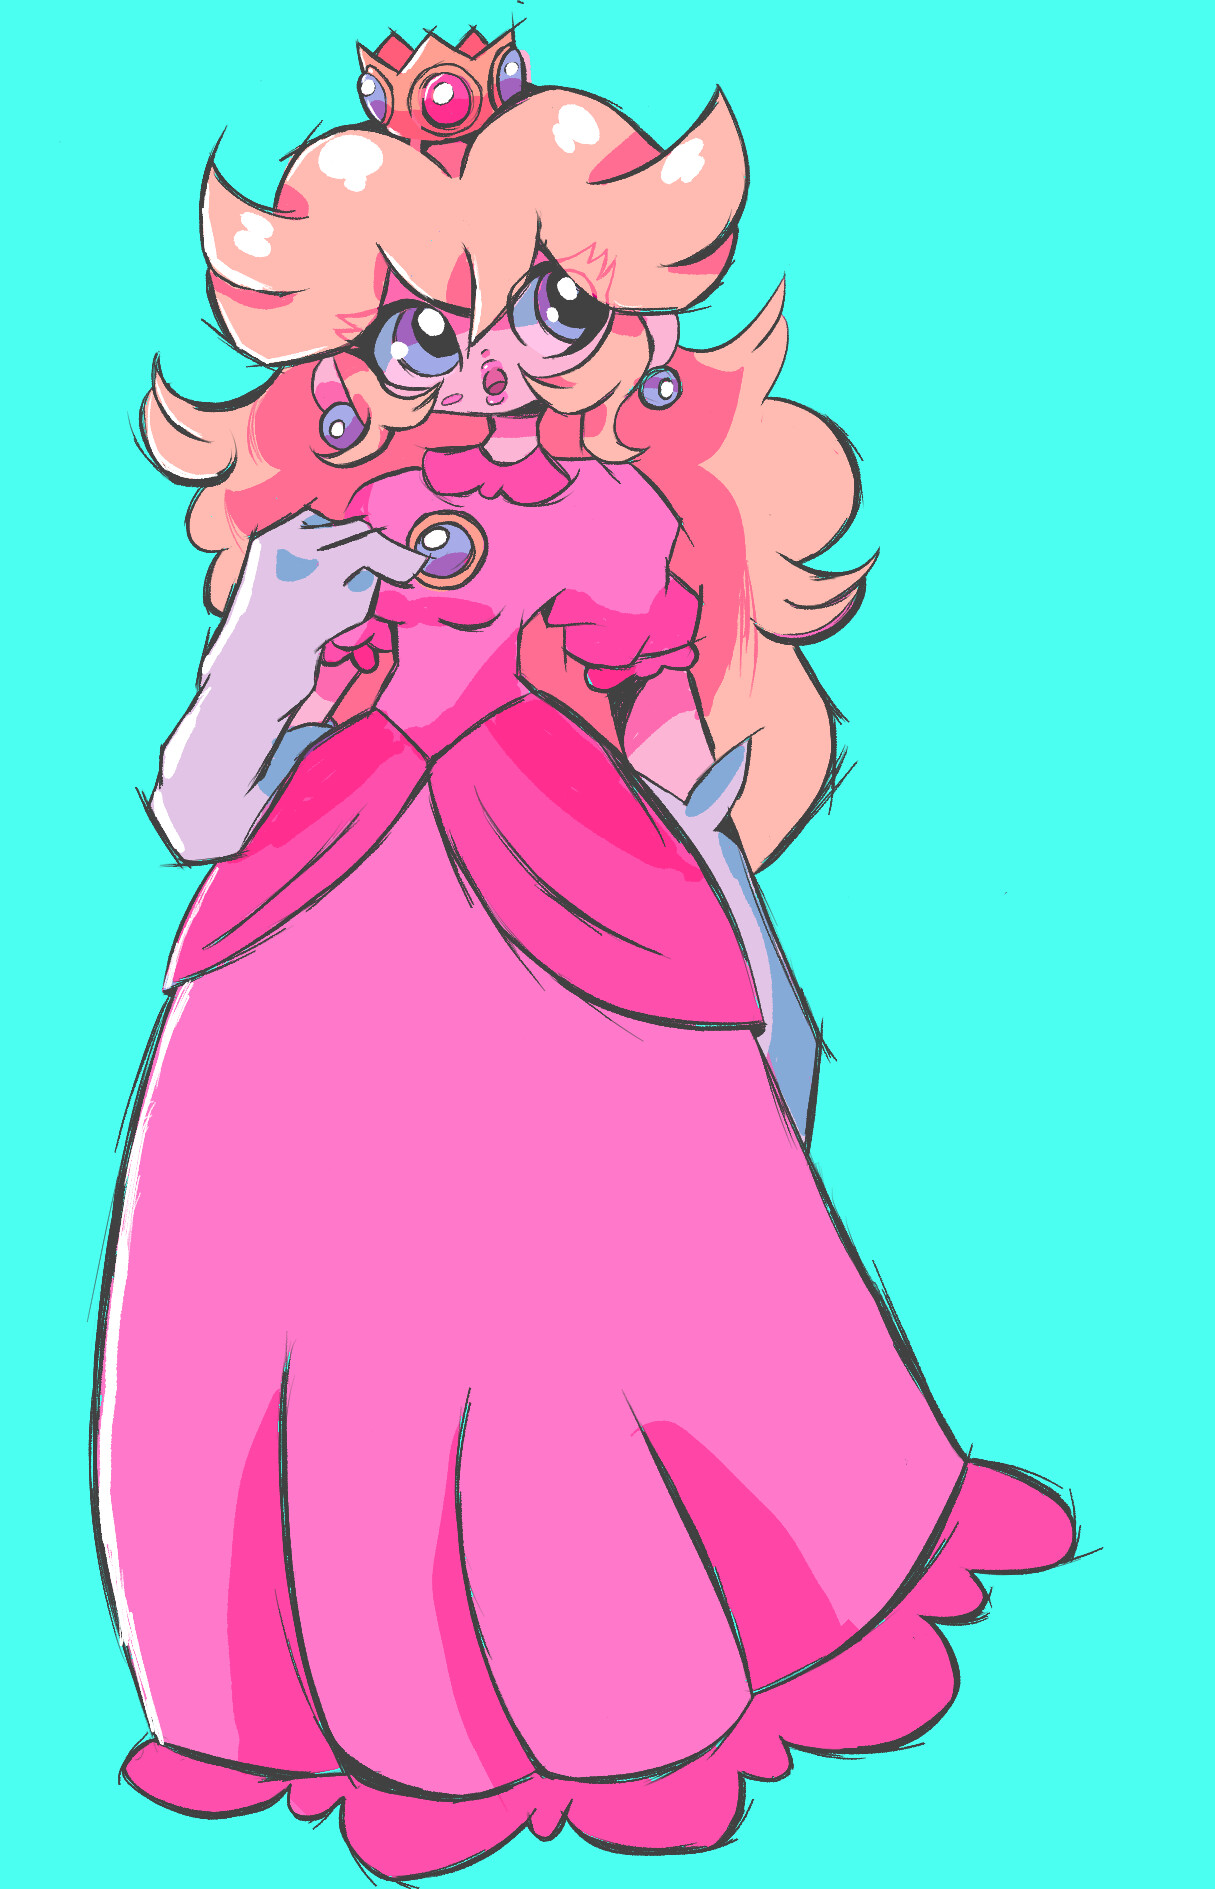 ArtStation - Princess peach